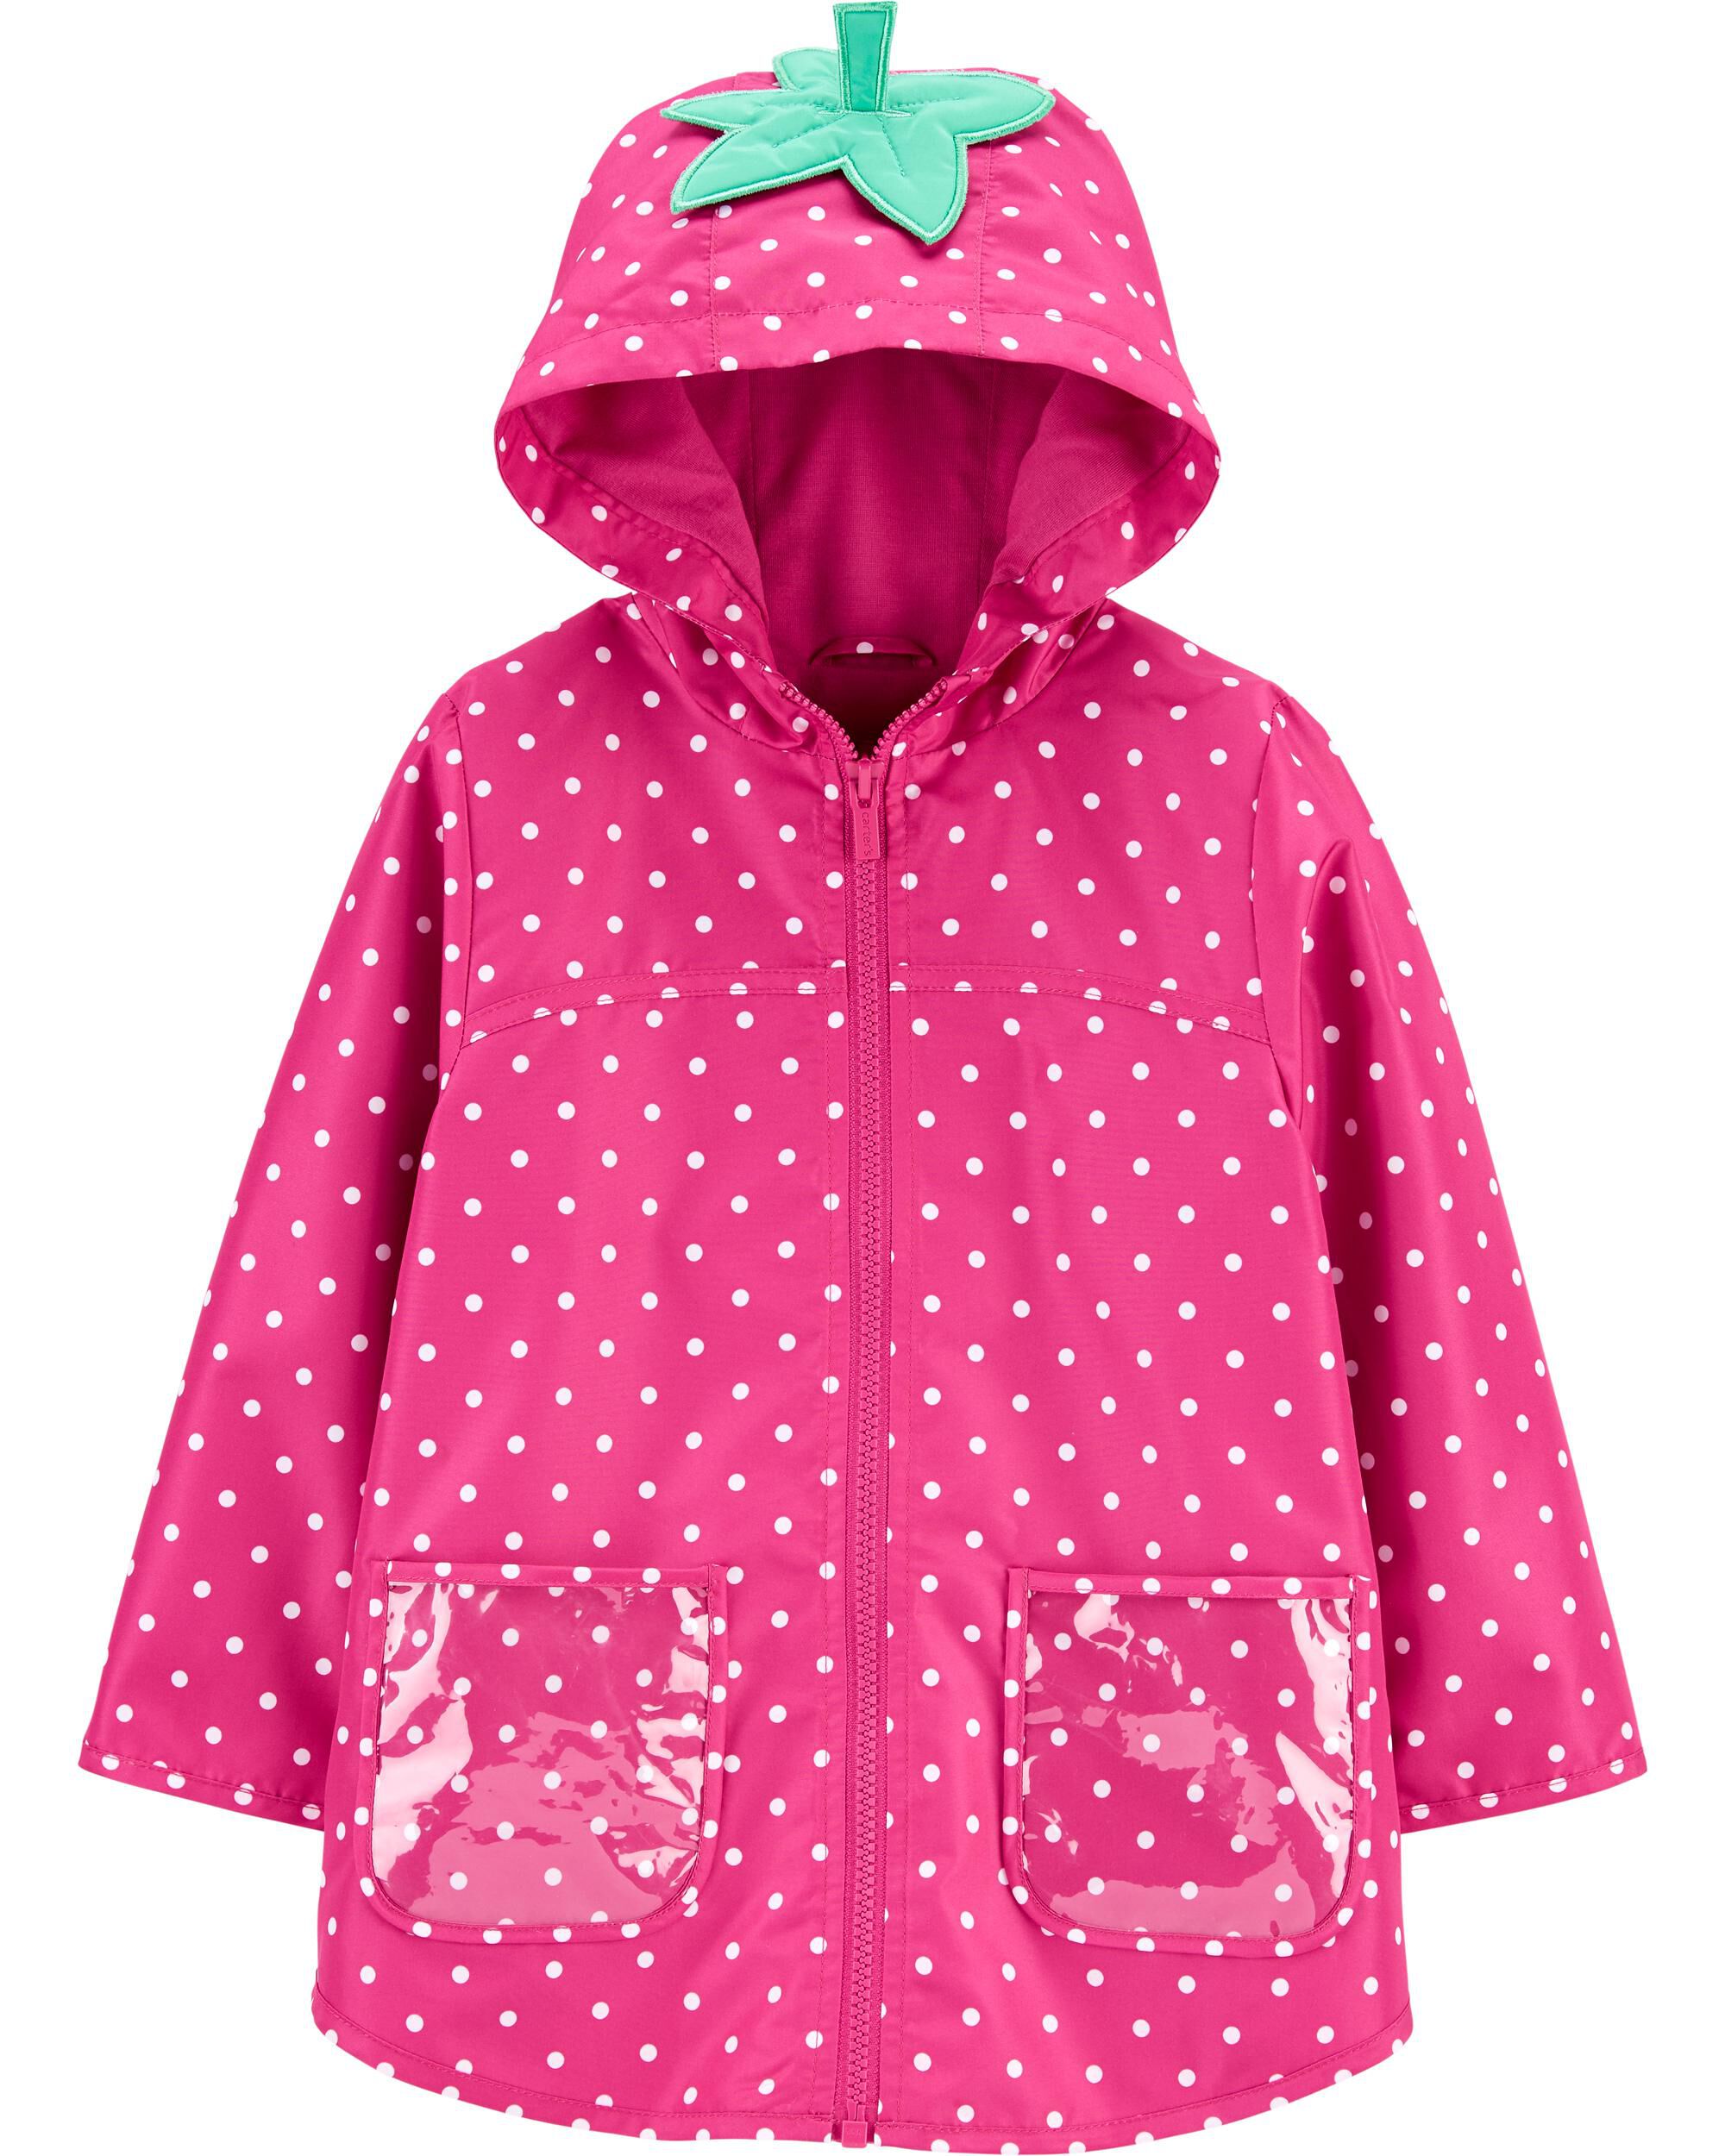 NWT Carters 3T Jacket Pink Black Animal Print Pockets Zip Front Toddler Girls